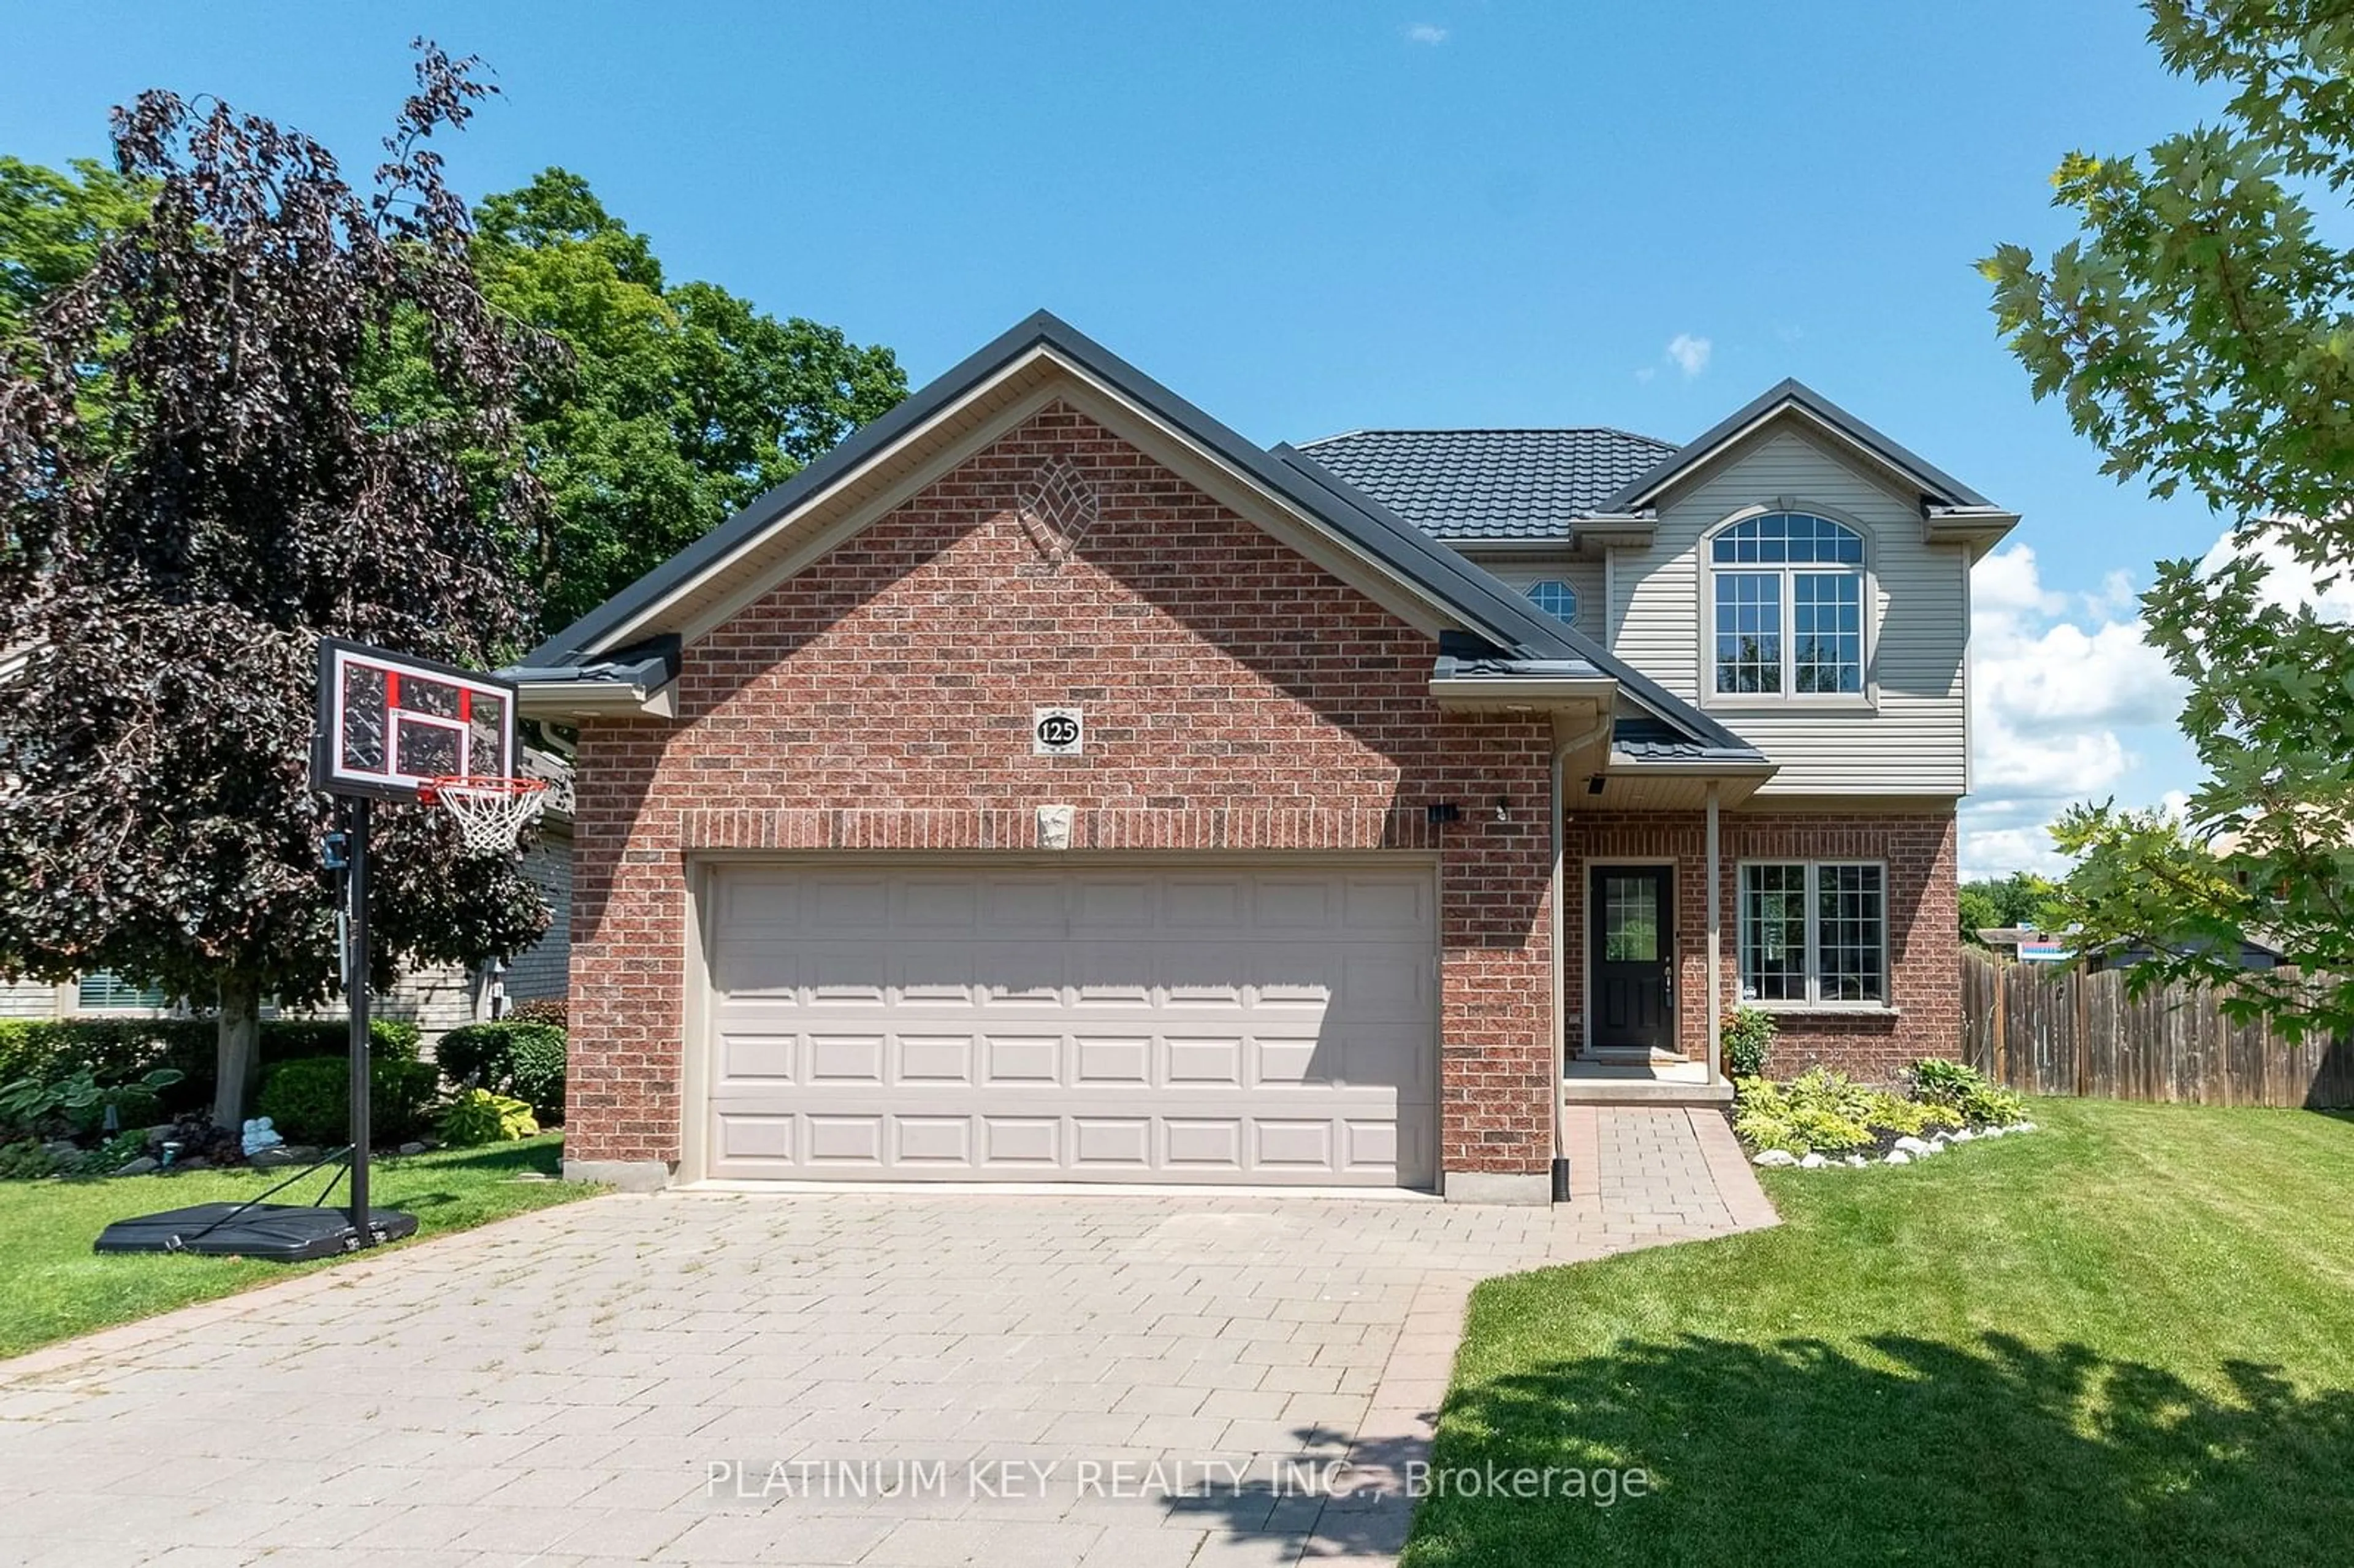 Home with brick exterior material for 125 Deborah Dr, Strathroy-Caradoc Ontario N7G 4E2